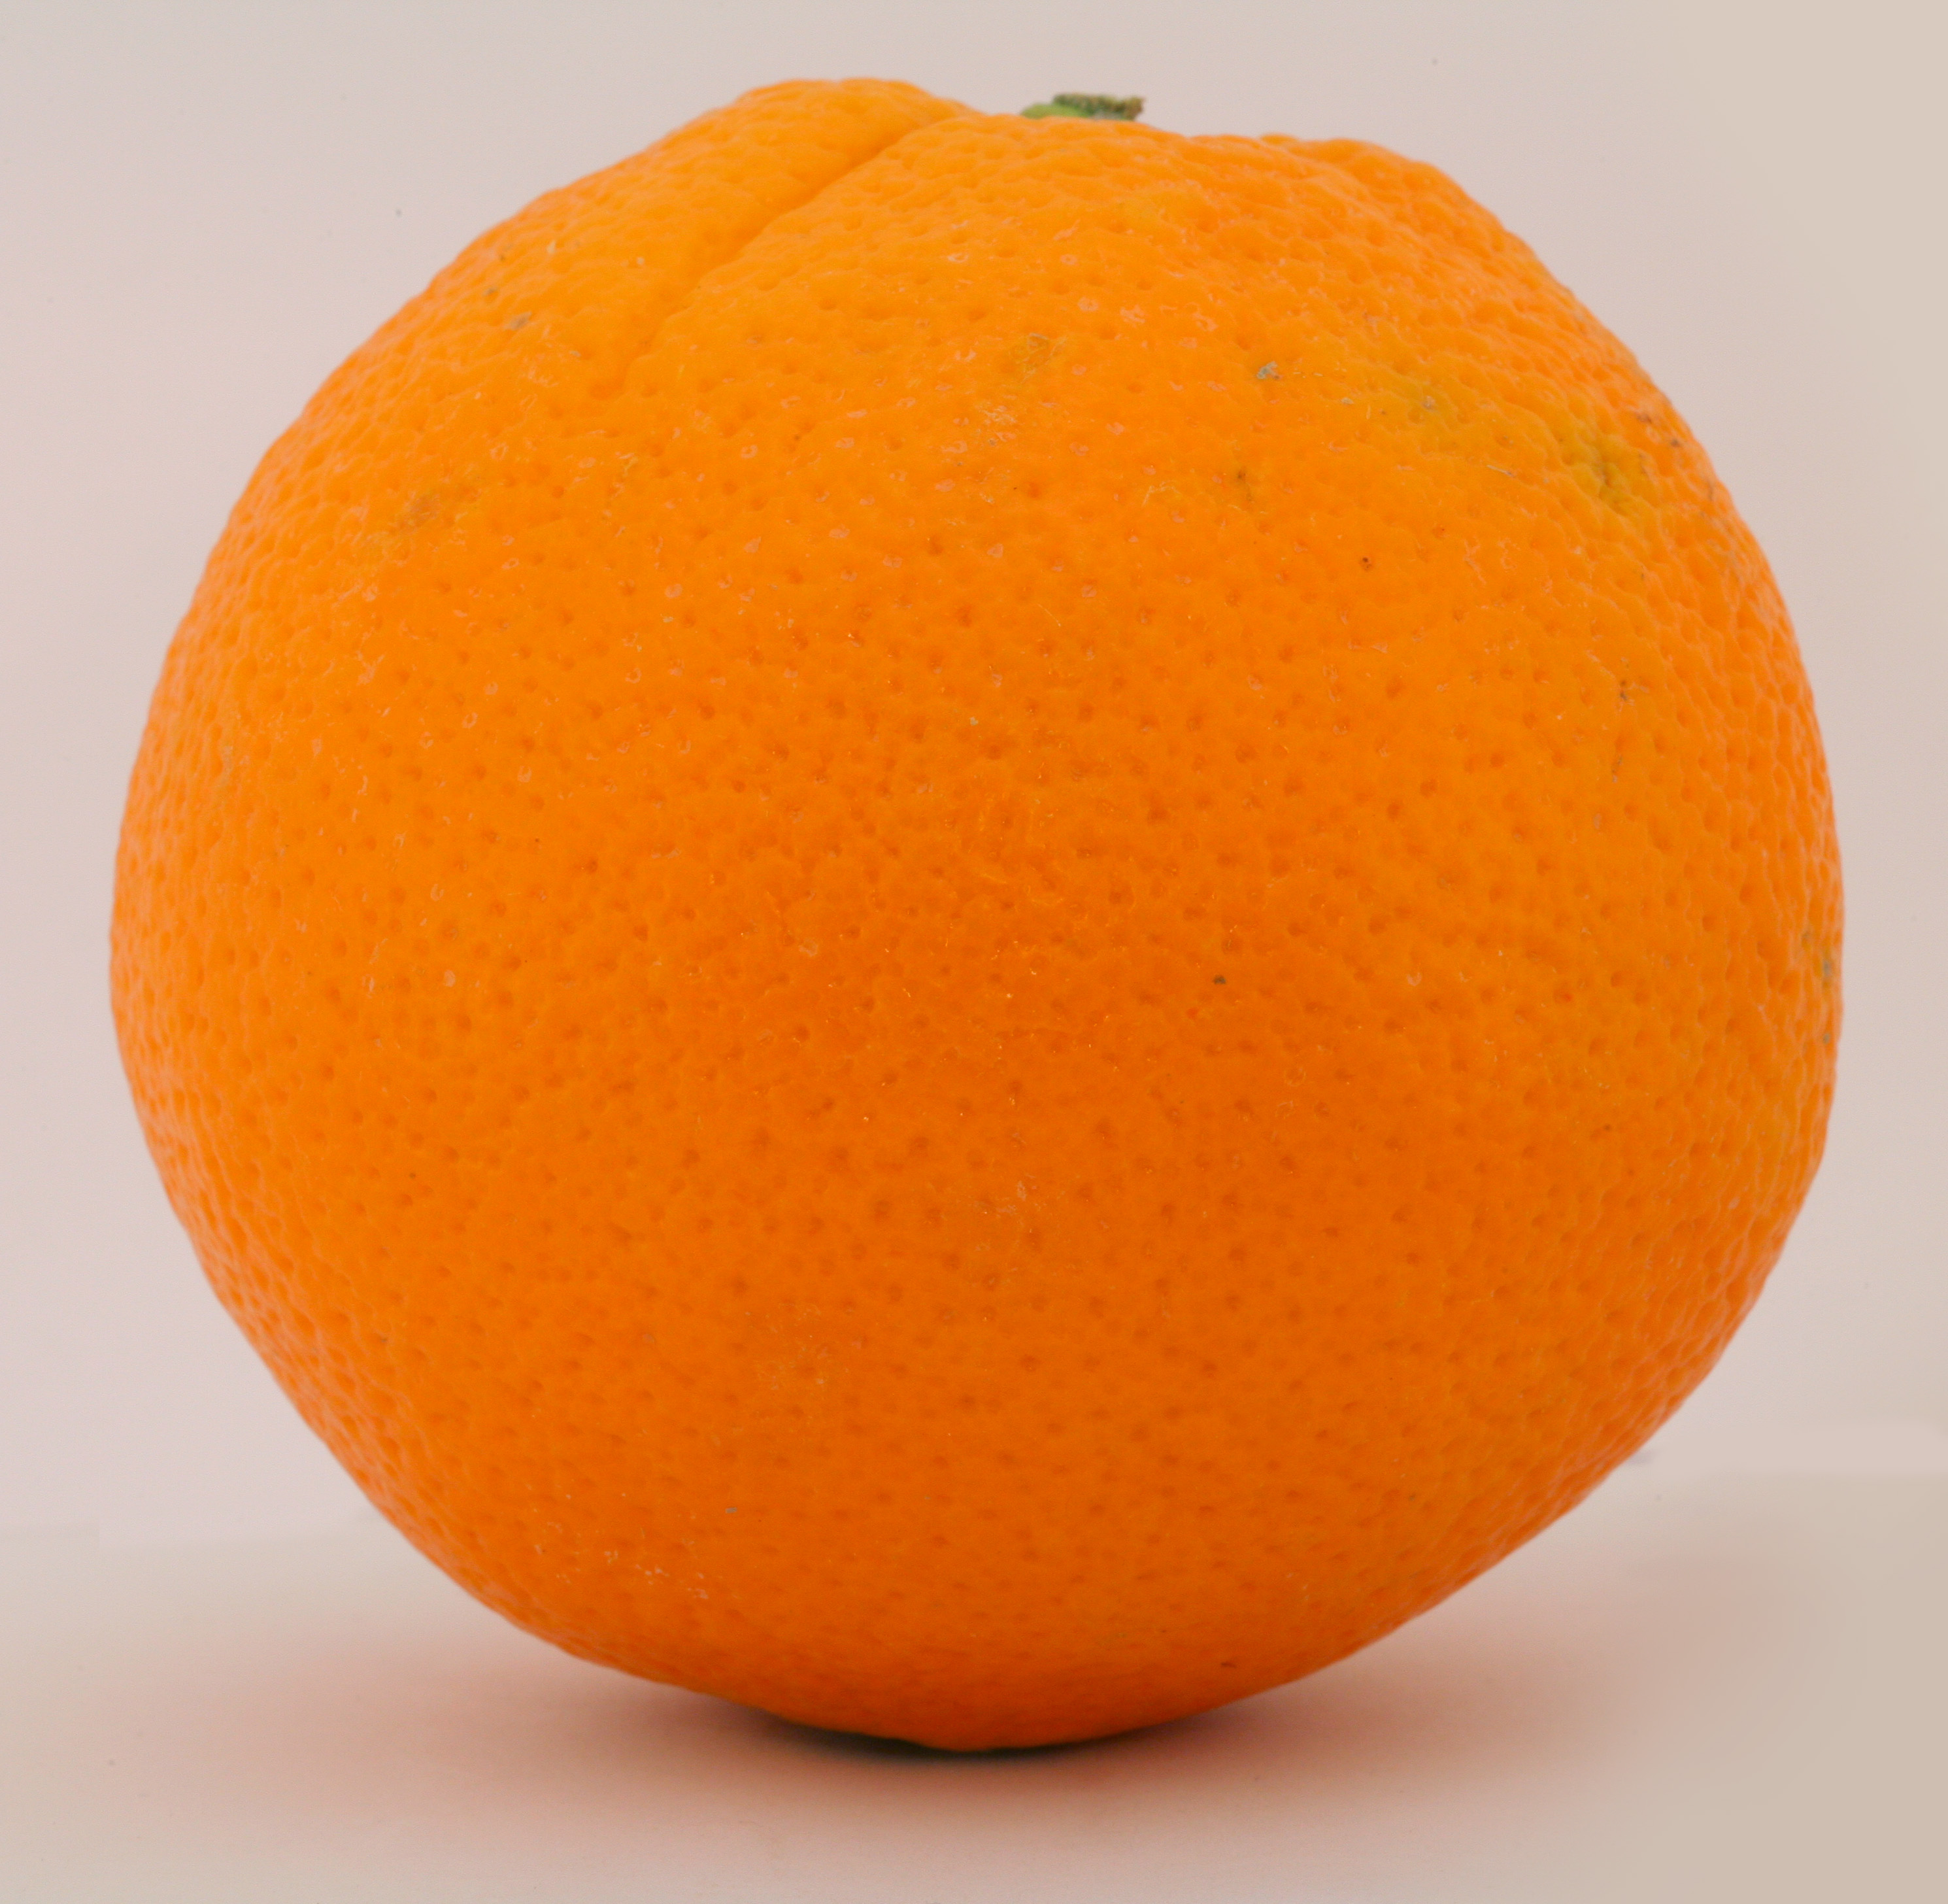 Кк апельсина. Апельсин. Большие апельсины. Апельсин один. Огромный апельсин.